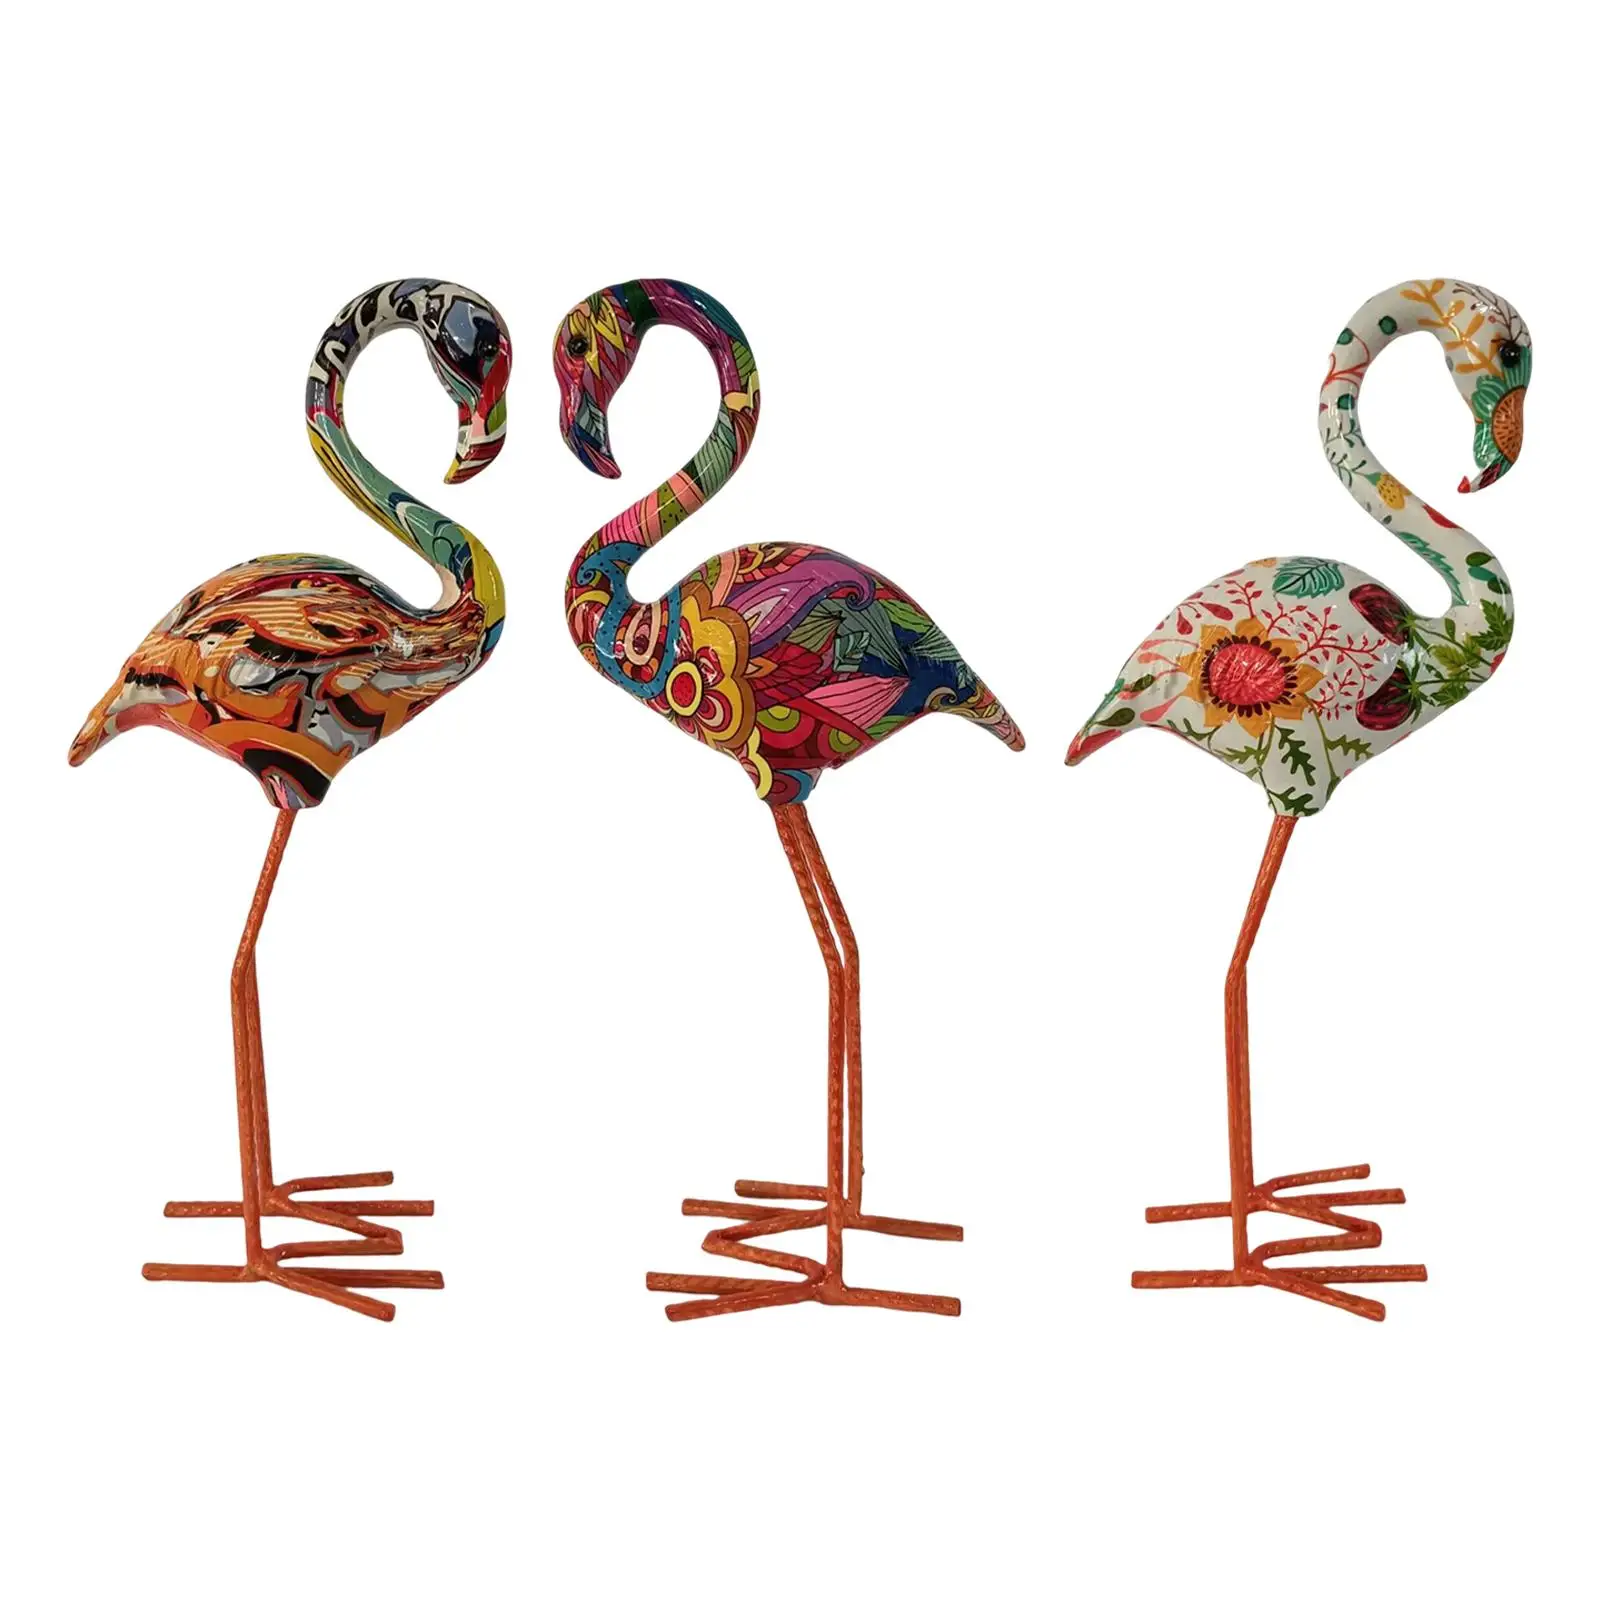 

Flamingo Garden Statue Birds Sculptures Lawn Ornaments Modern Art Crafts Home Collectible Resin Figurines for Sidewalks Decor